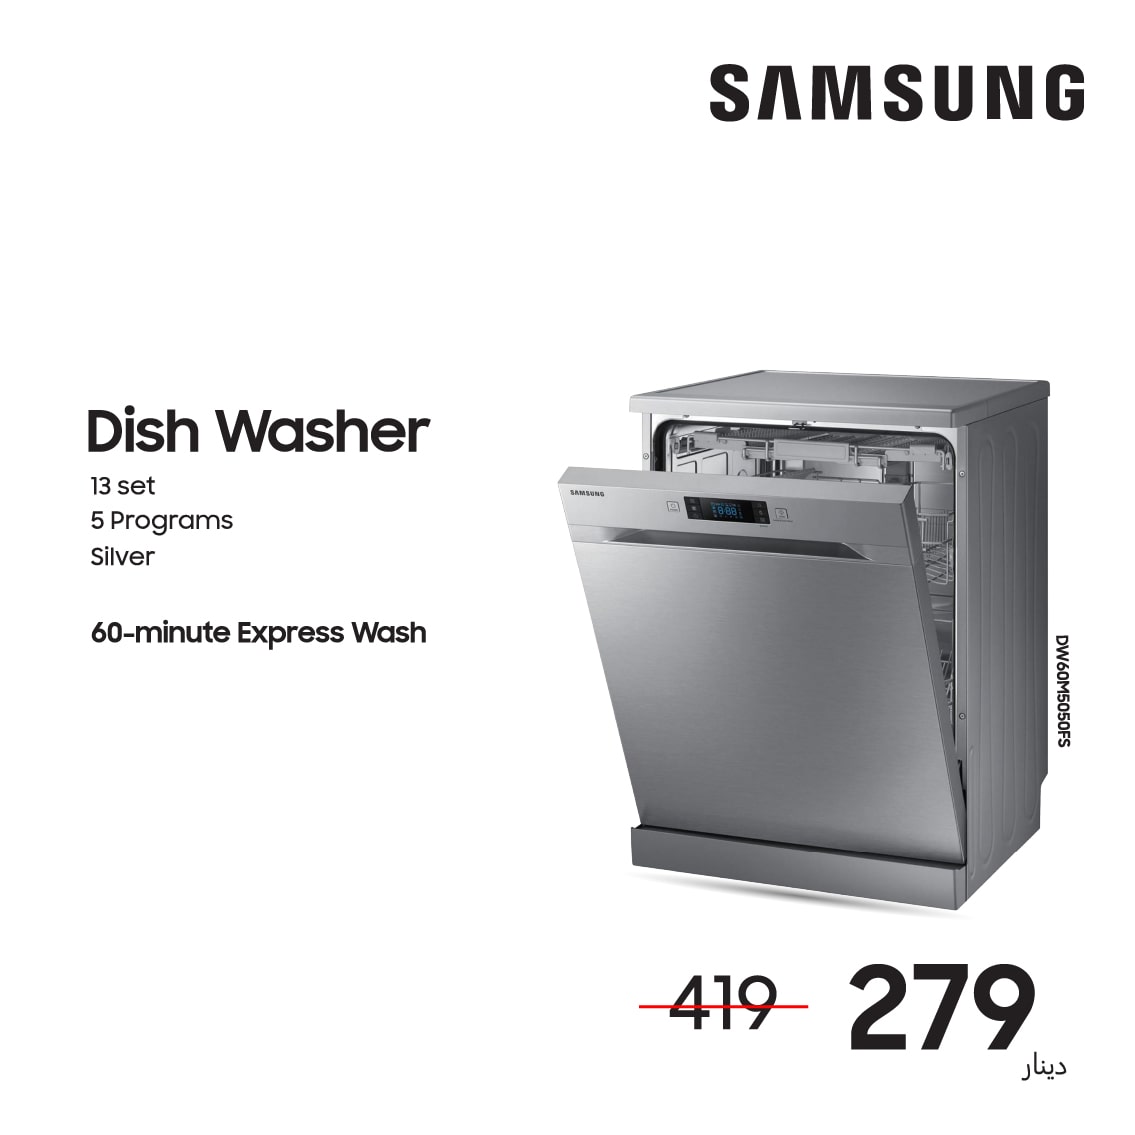 Samsung Dishwasher 13 Seats 5 Programs - Silver